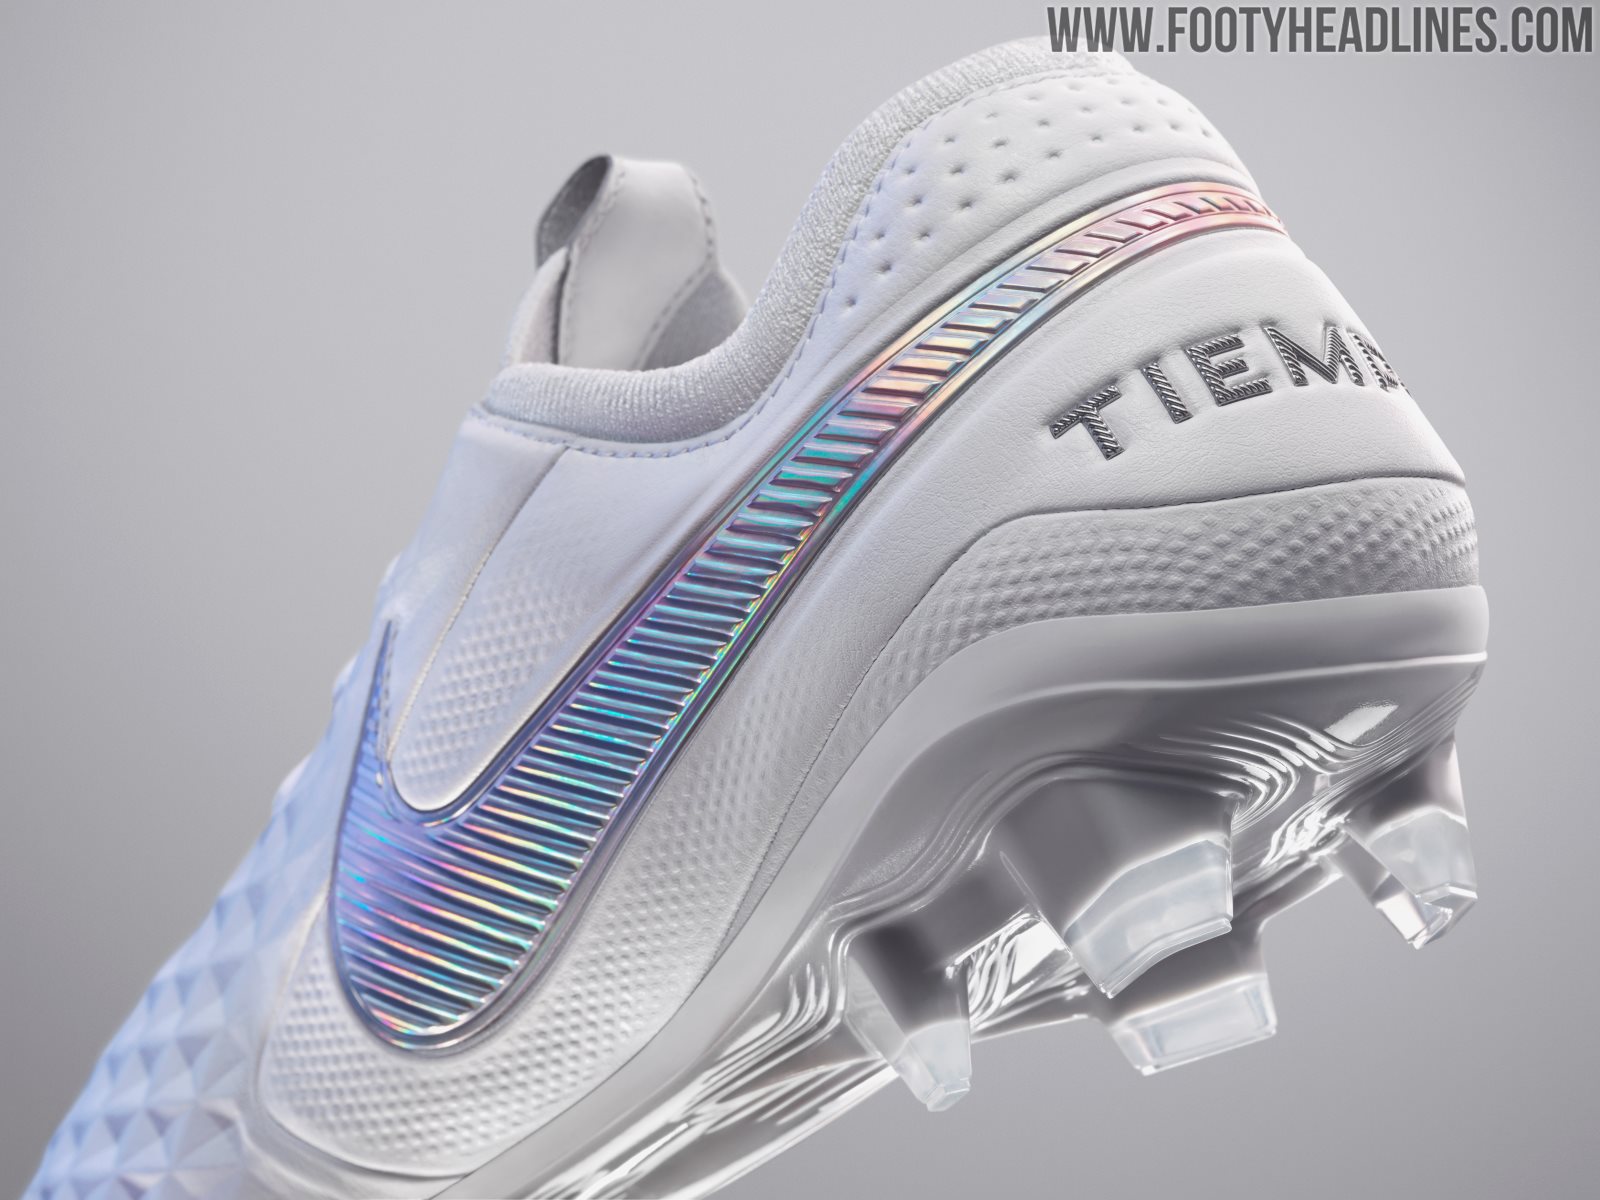 NextGen Nike Tiempo Legend 8 'Nouveau White' Boots Released Footy